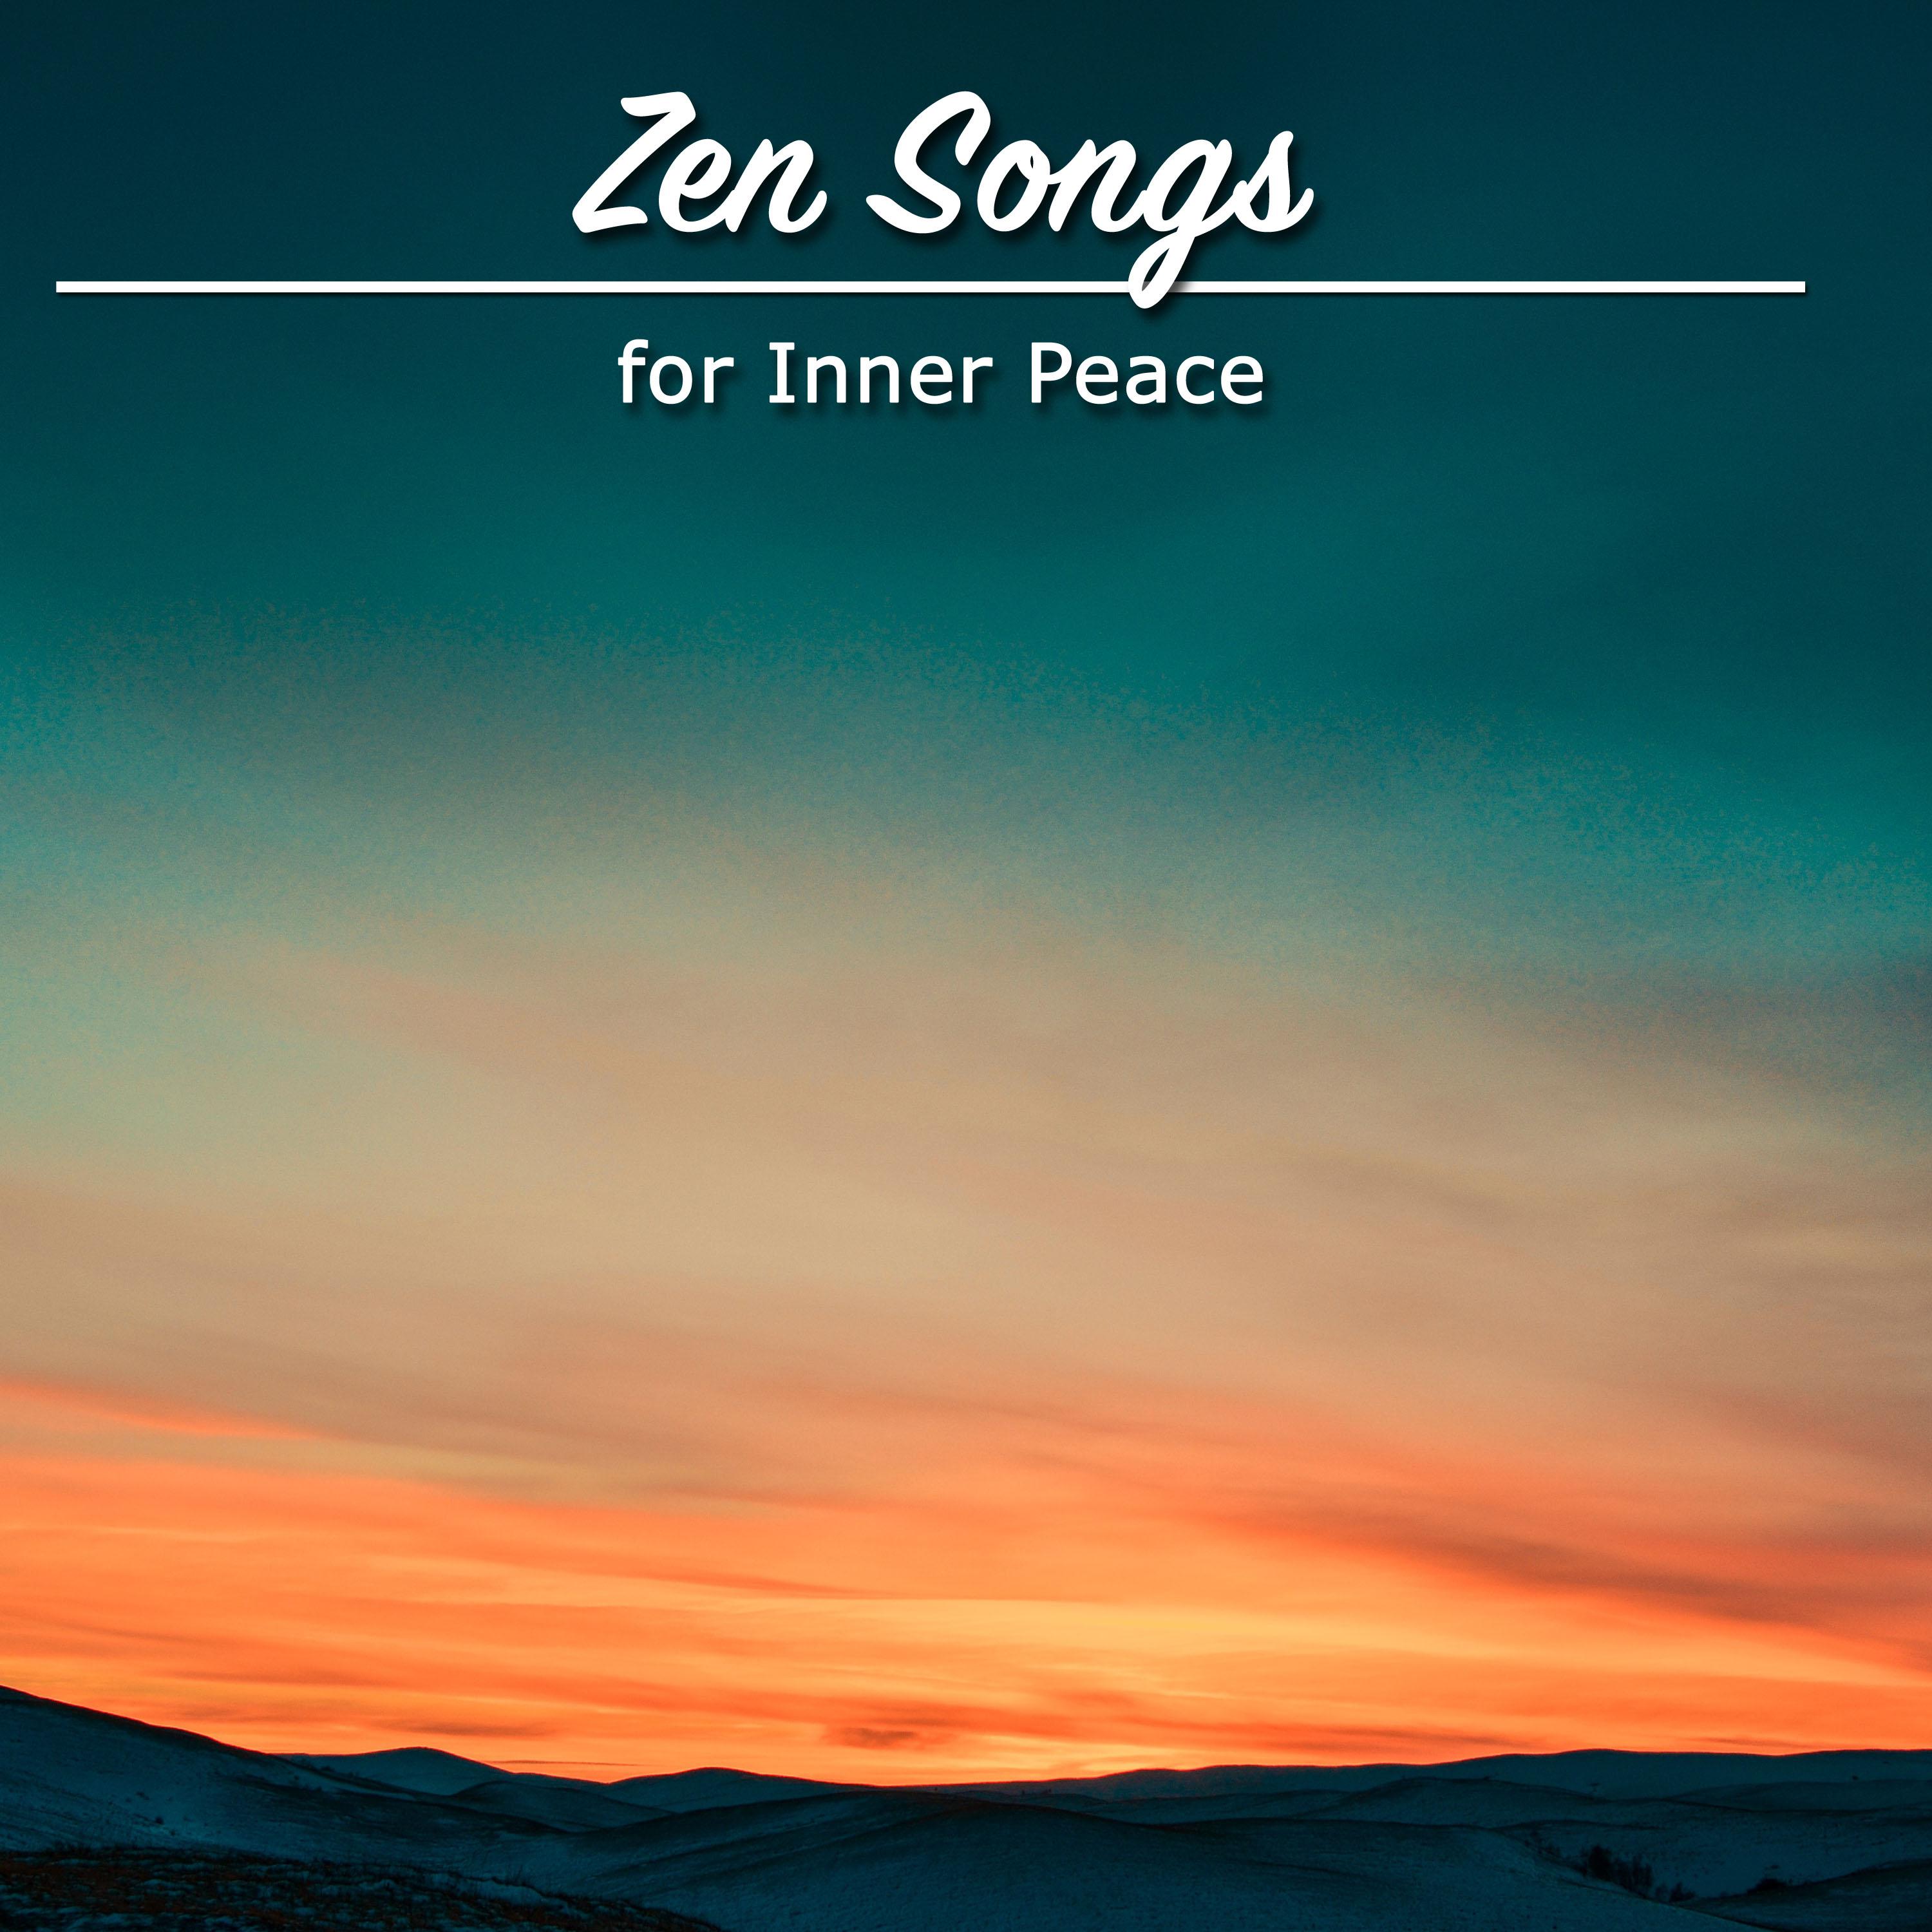 11 Mood Uplifting Songs for Meditation, Yoga & Spa